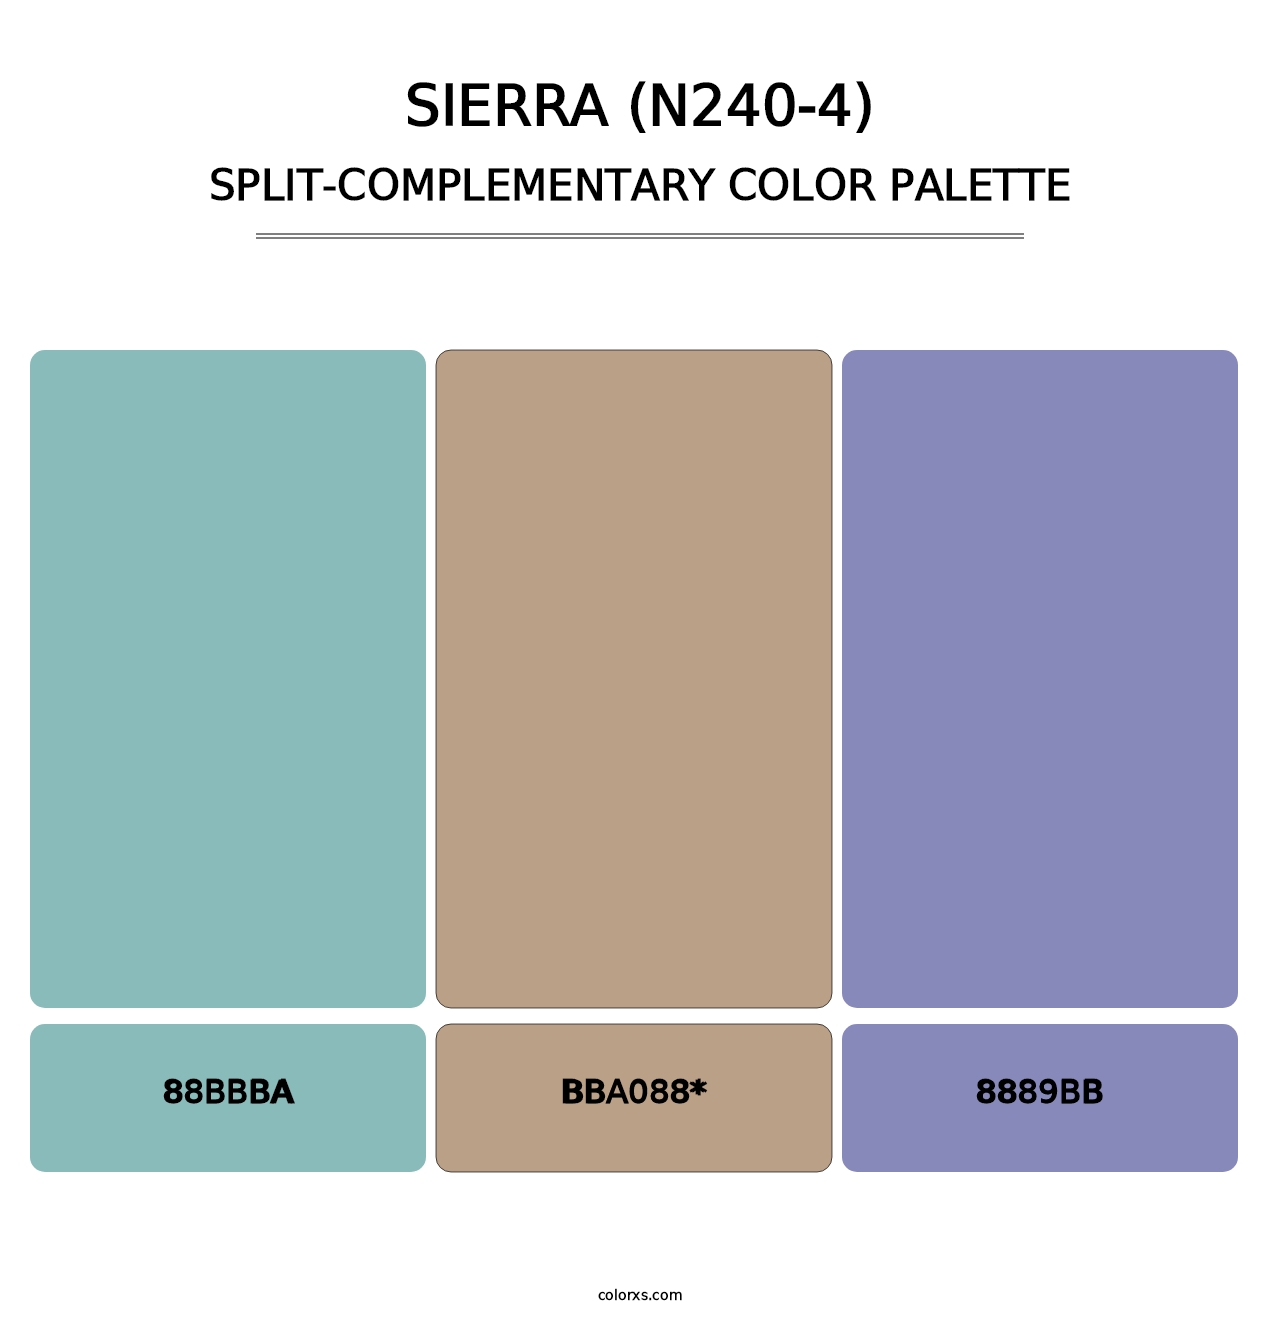 Sierra (N240-4) - Split-Complementary Color Palette